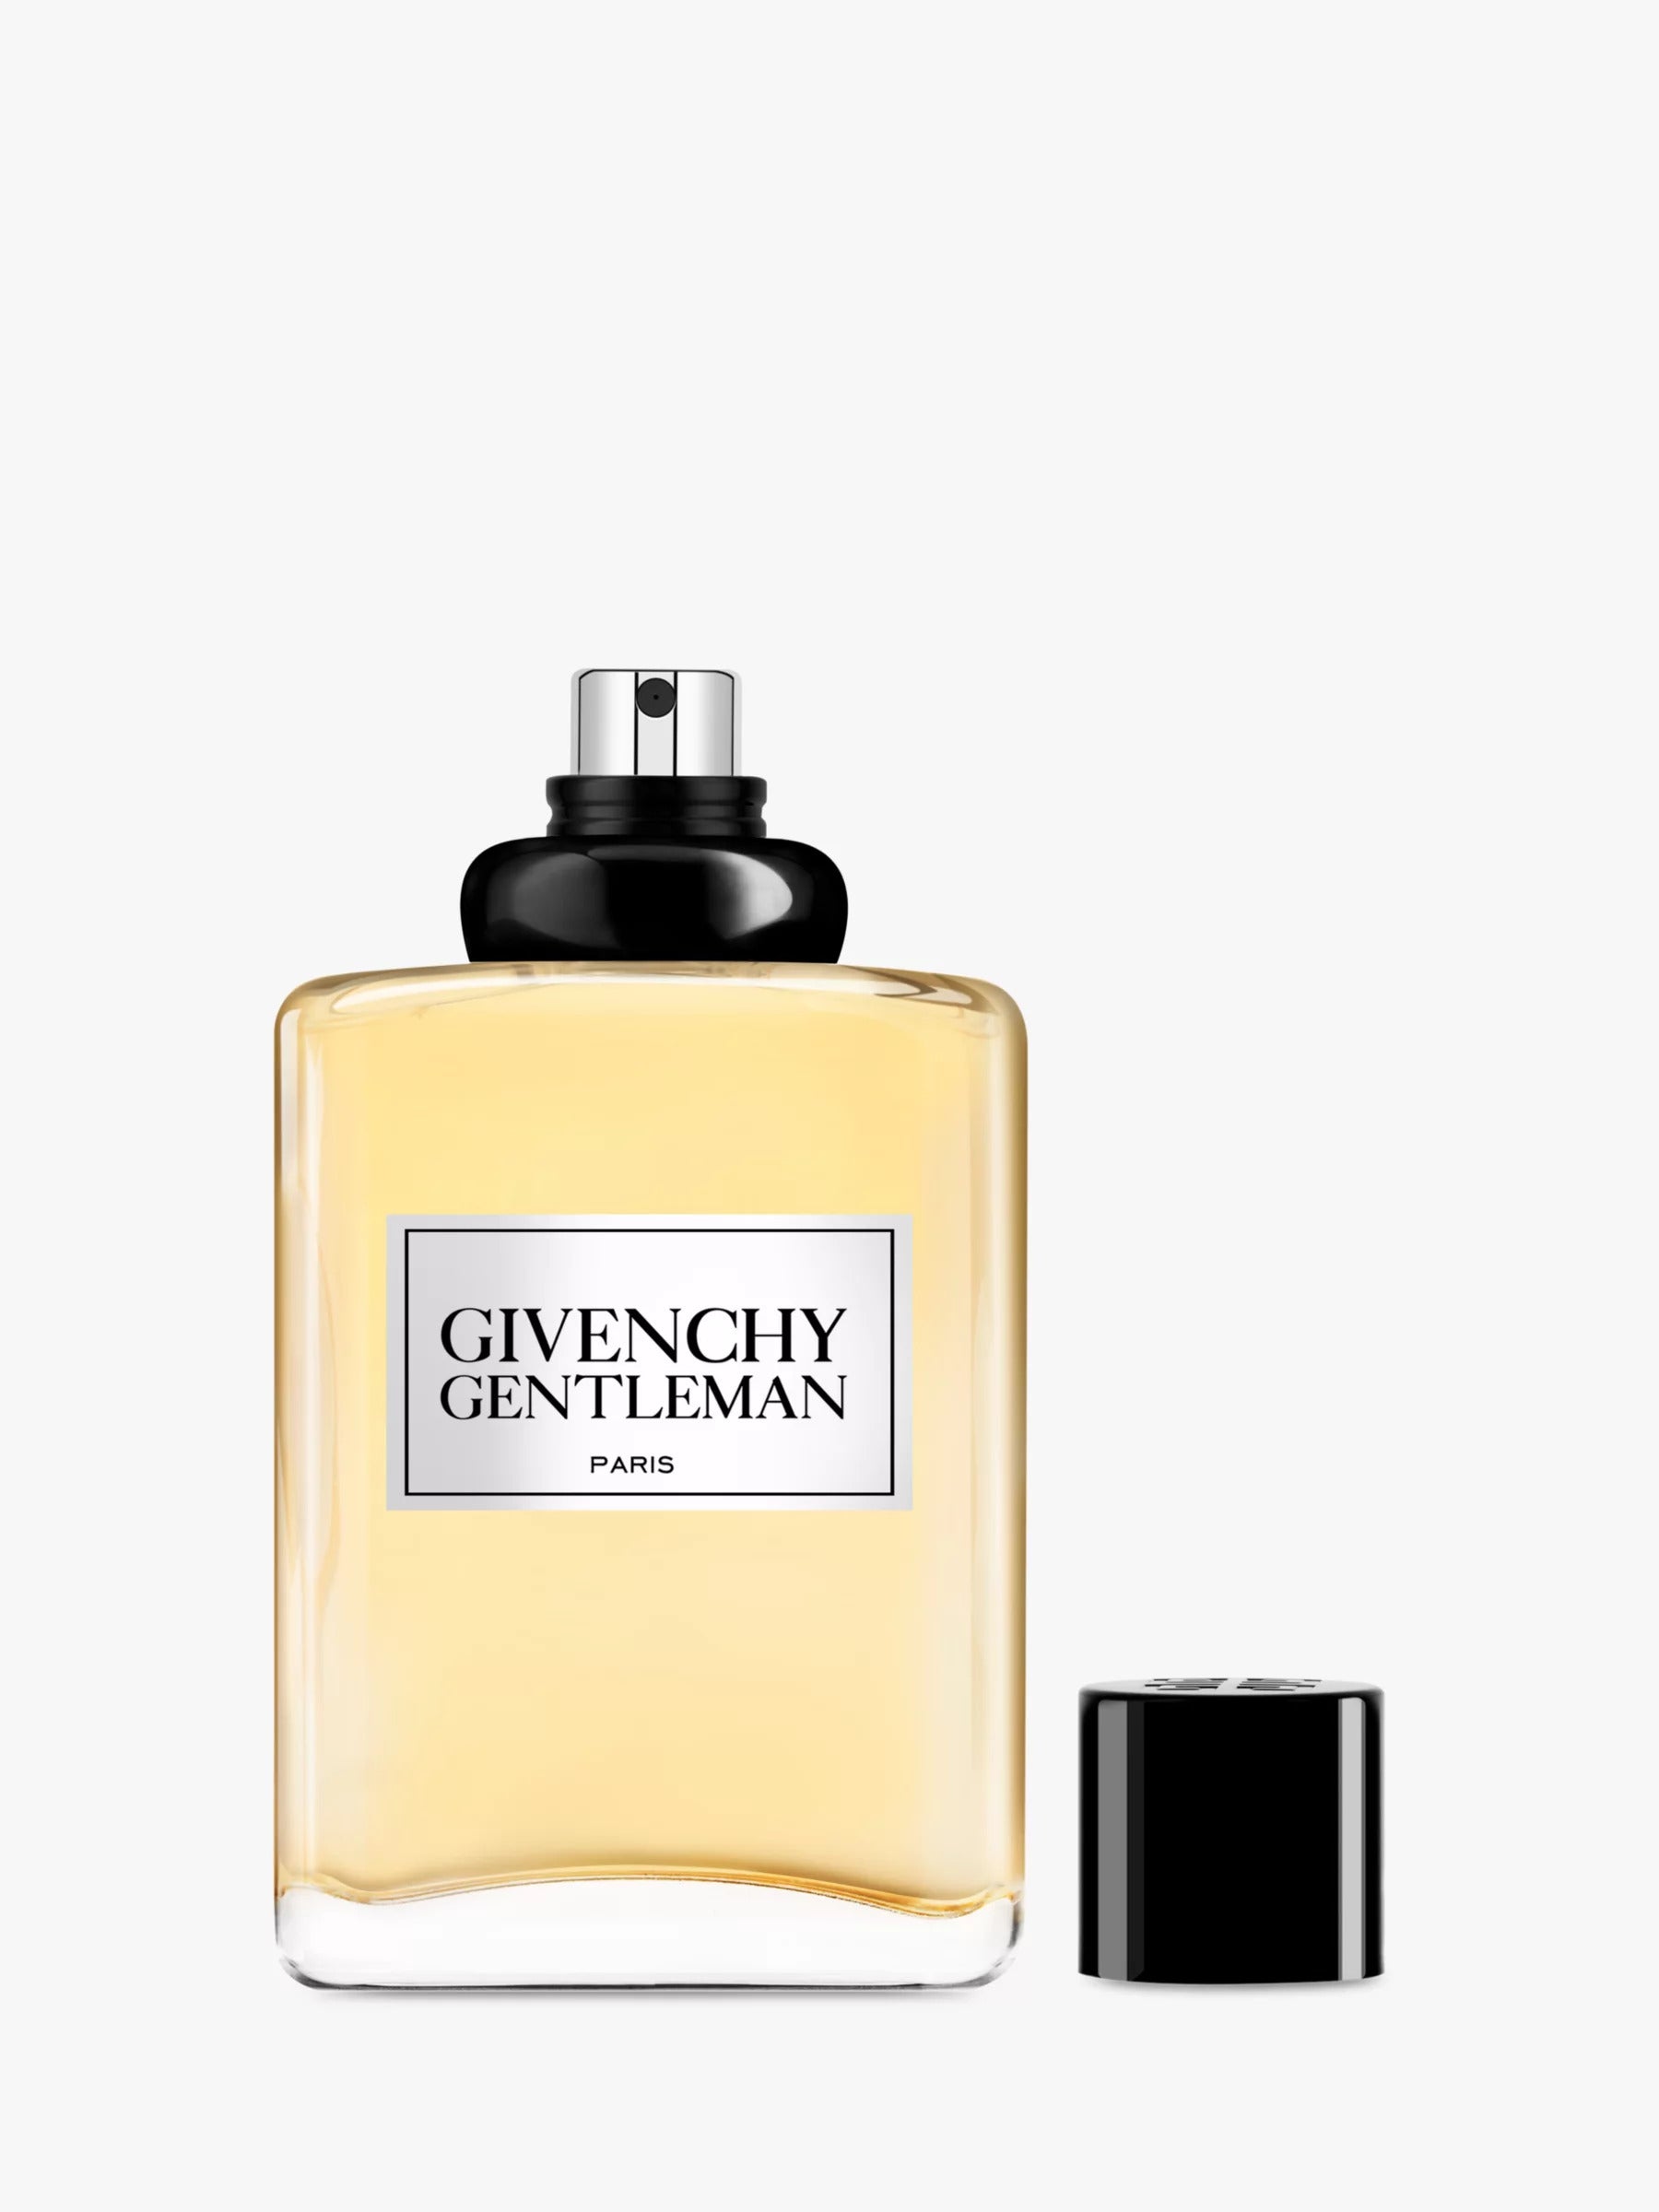 Givenchy Gentleman 100 ml Eau De Toilette Spray for Men